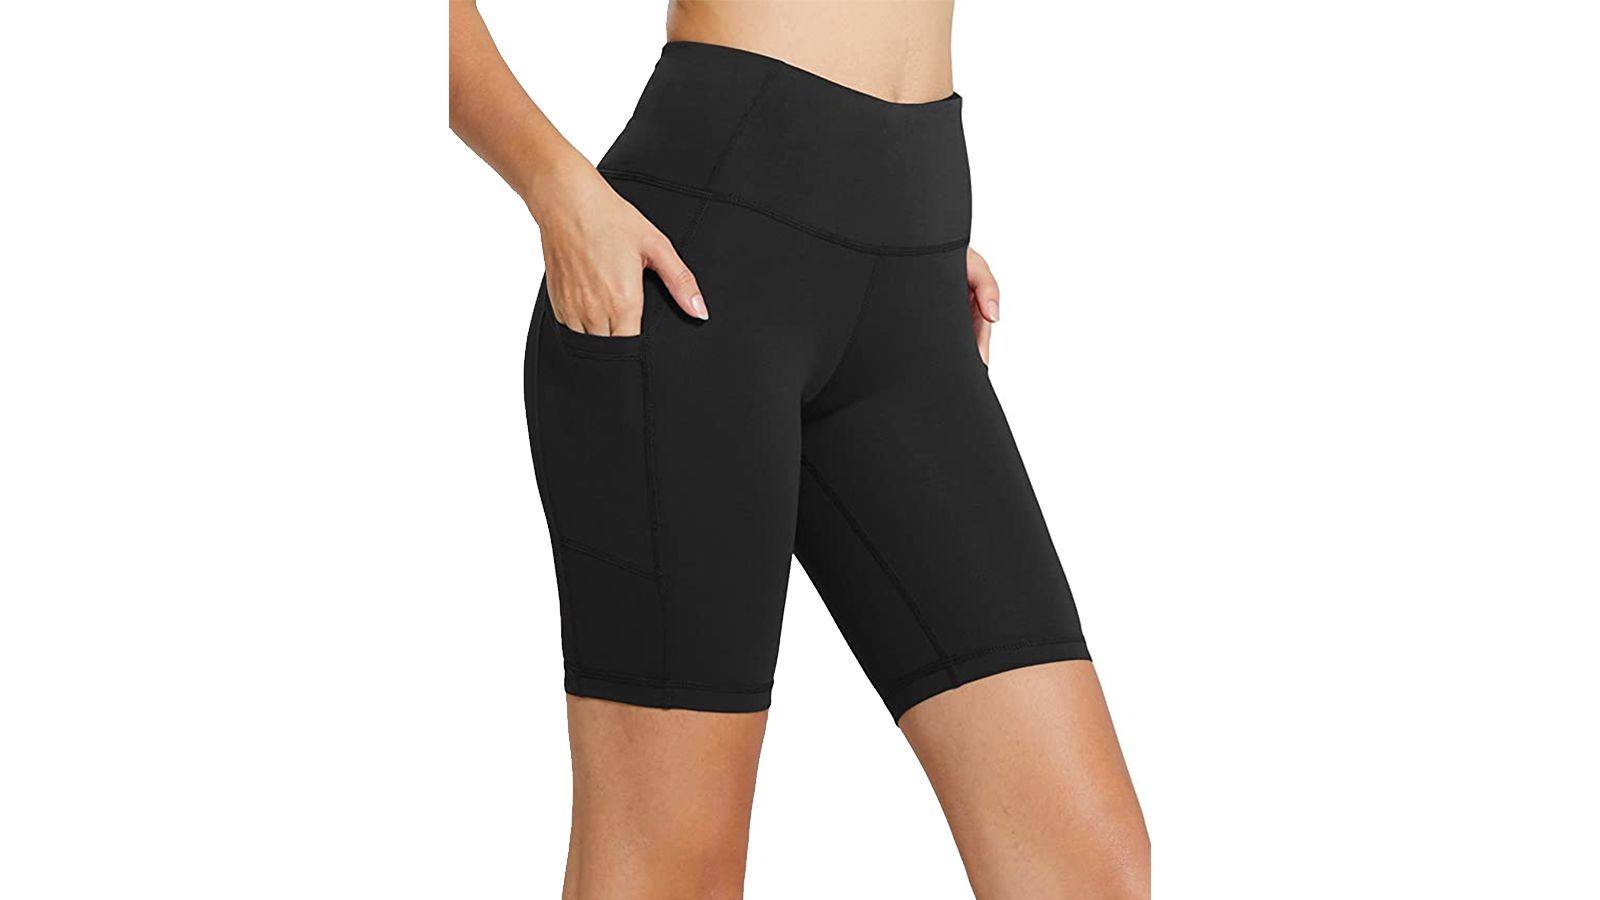 UUE Biker Shorts for Women High Waist Yoga Shorts with Pockets